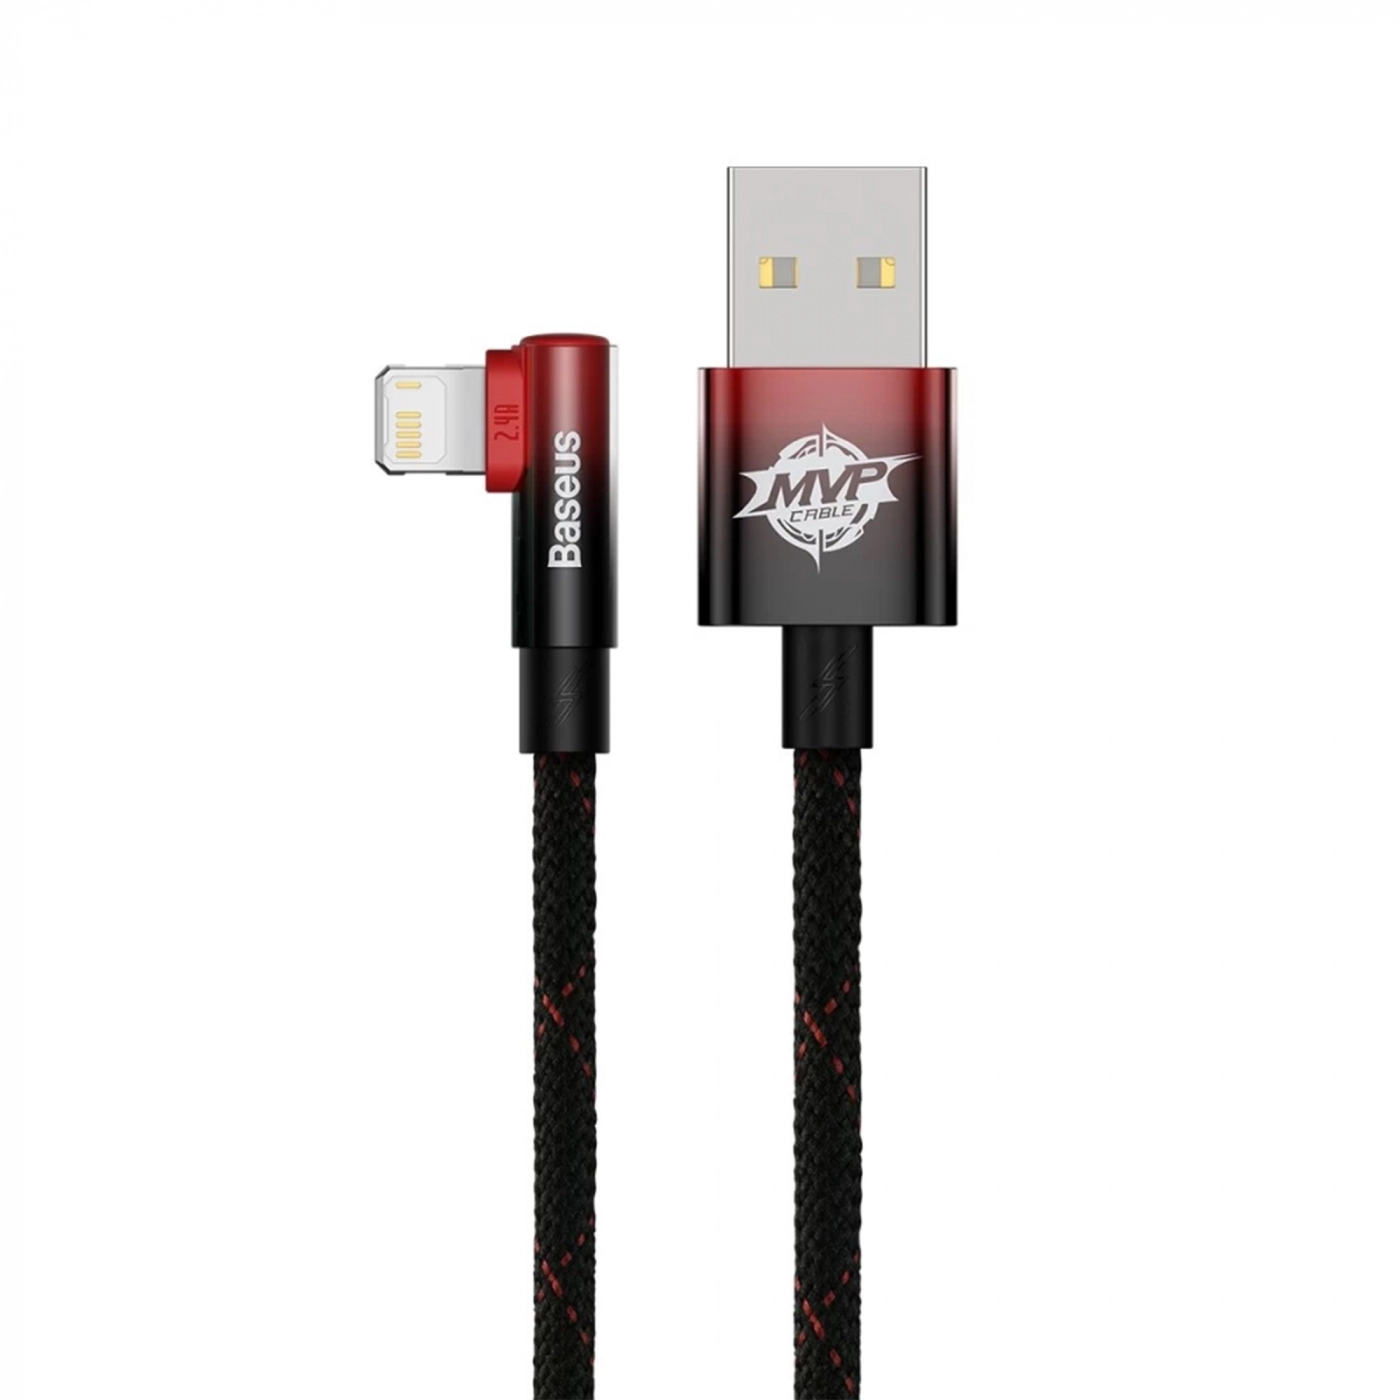 Купить Кабель Baseus MVP 2 Elbow-shaped Fast Charging Data Cable USB to iP 2.4A 2m Black|Red - фото 1